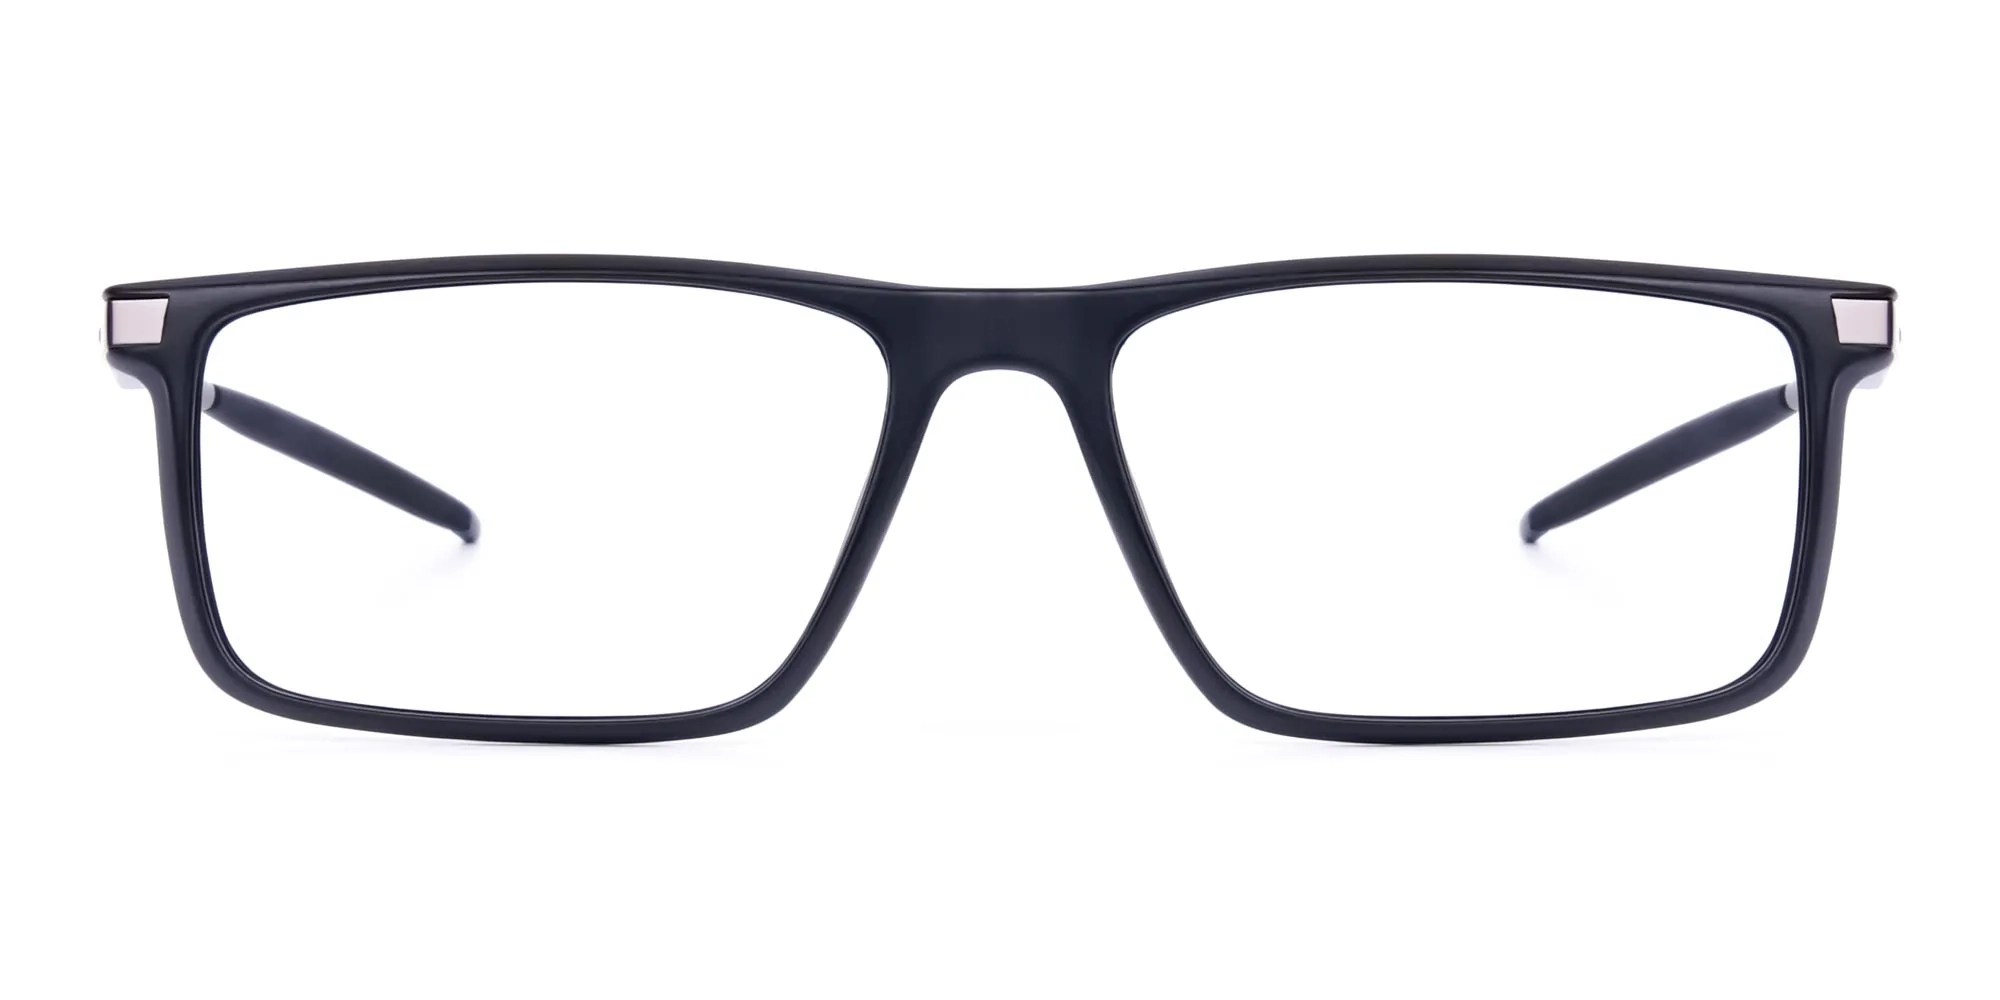 Black full-rimmed prescription sports glasses-2